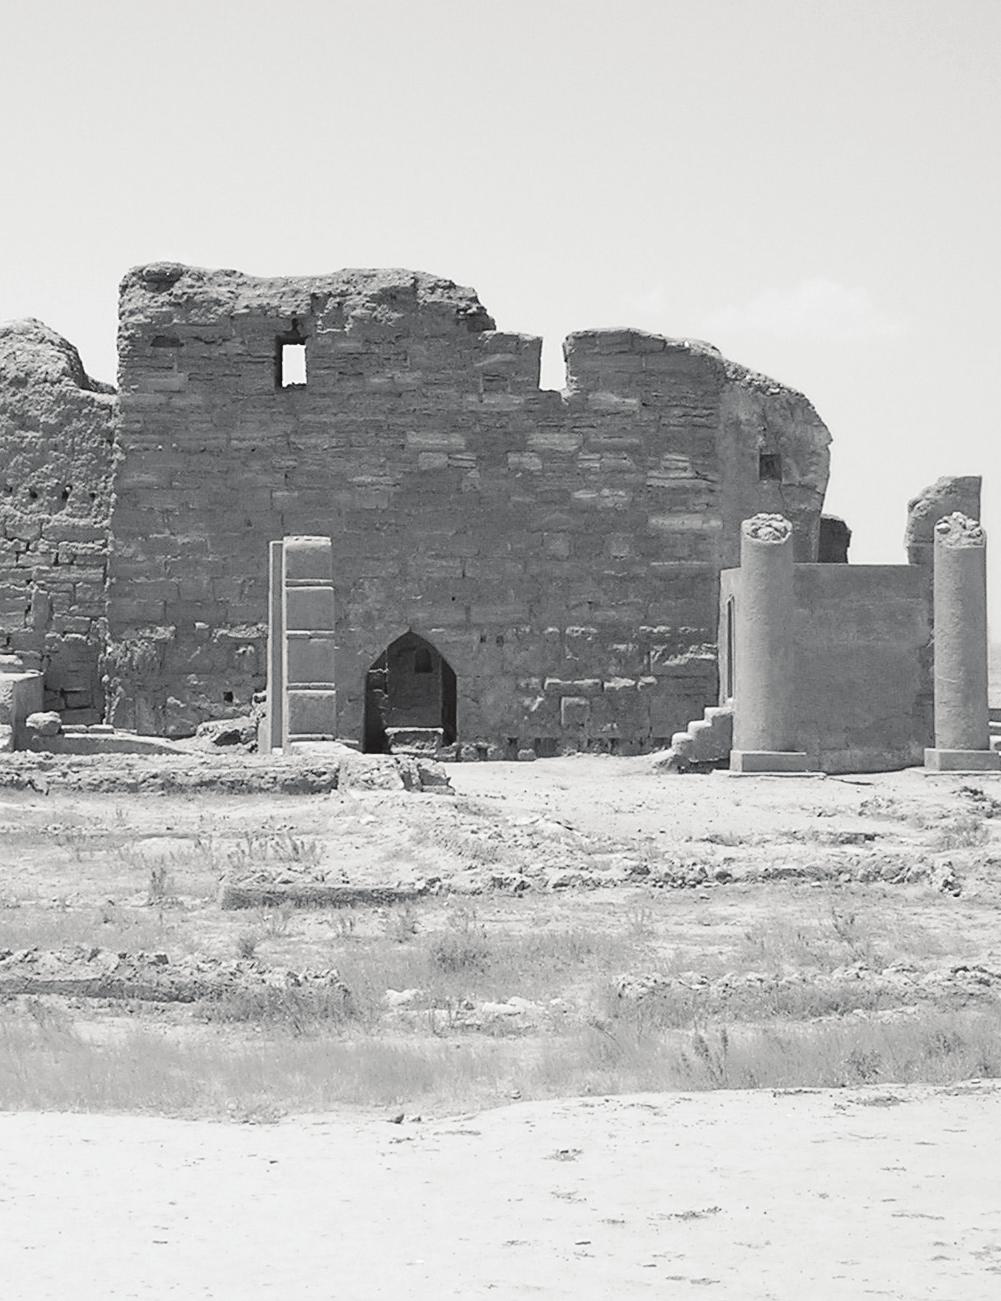 Dura Europos (Tell al-salilhiye) دورا أسوبورو Deir Ez-Zor